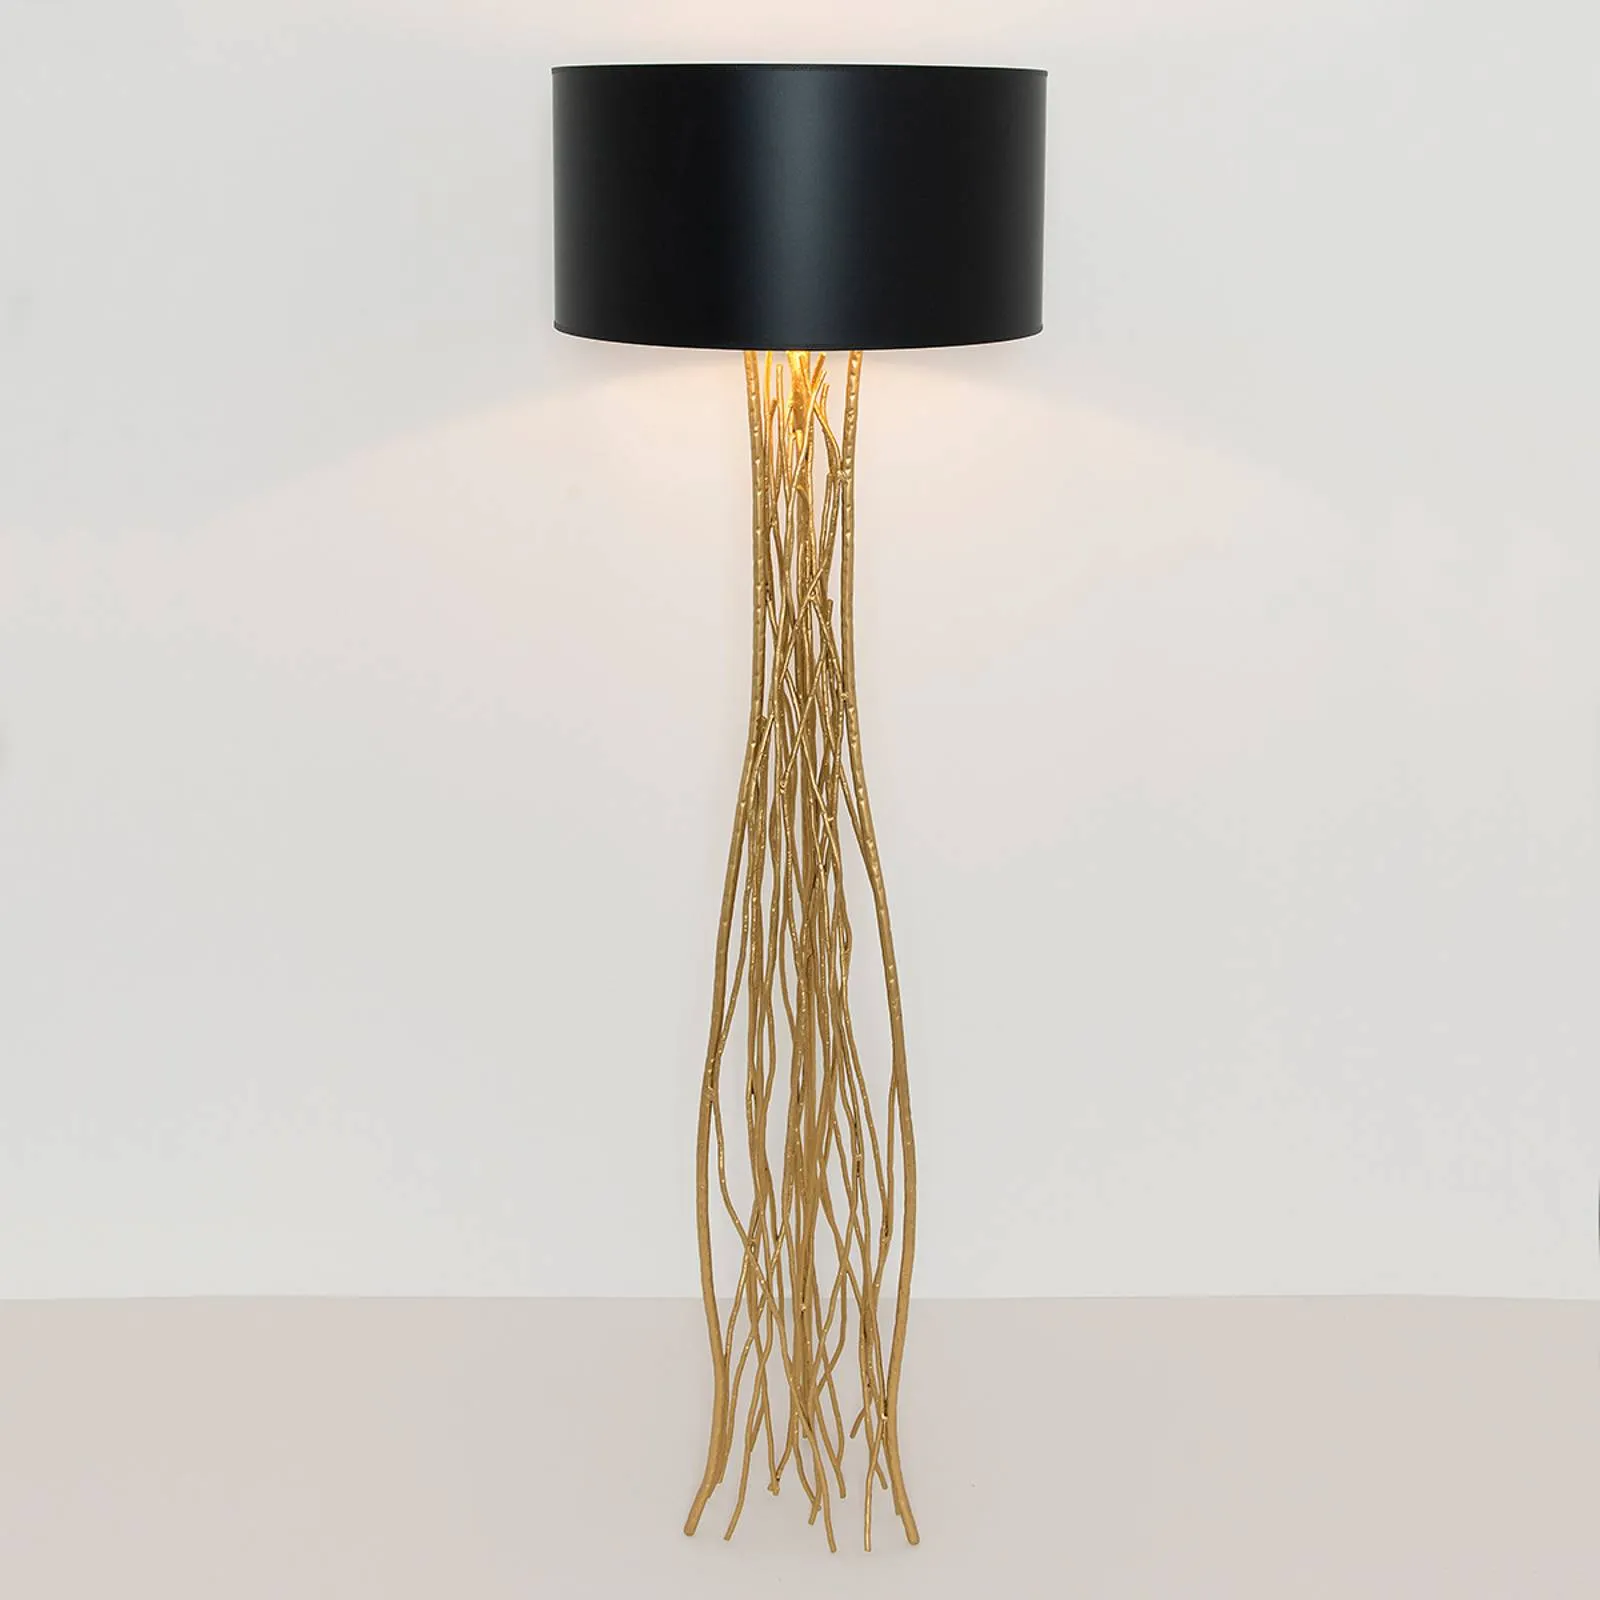 Capri floor lamp in black and gold